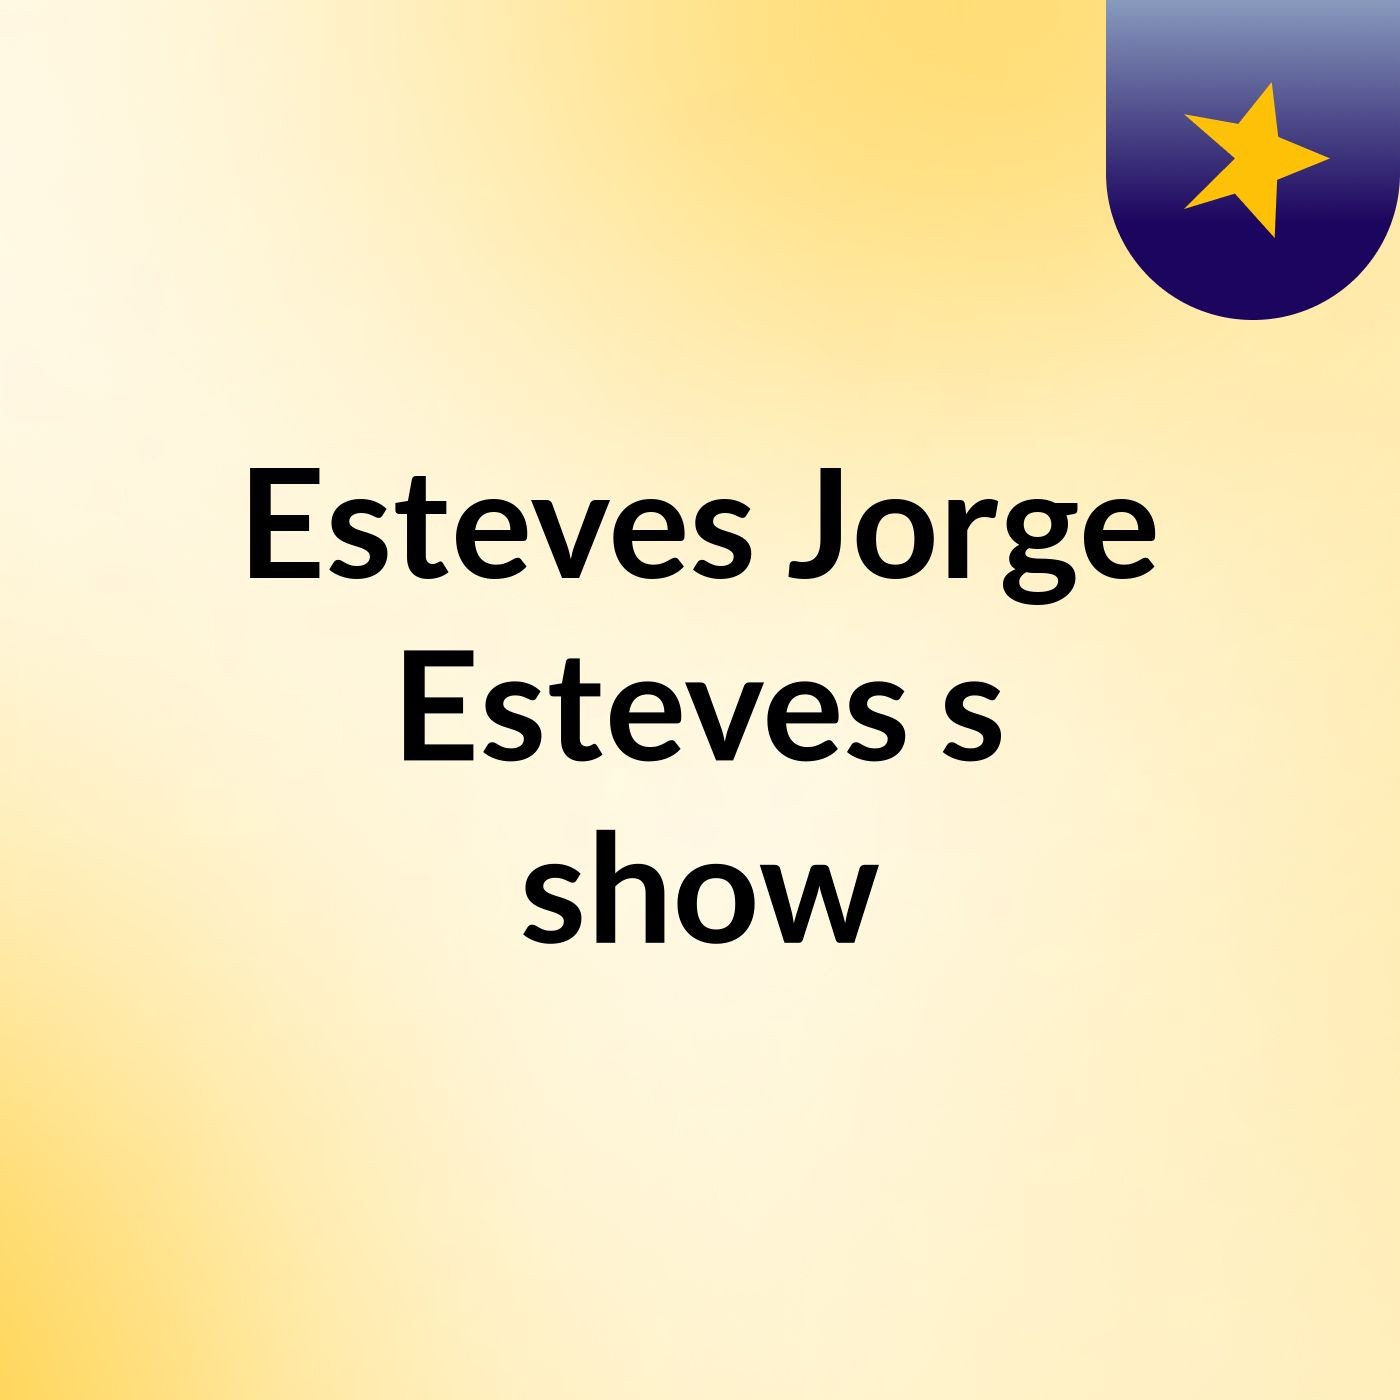 Esteves Jorge Esteves's show